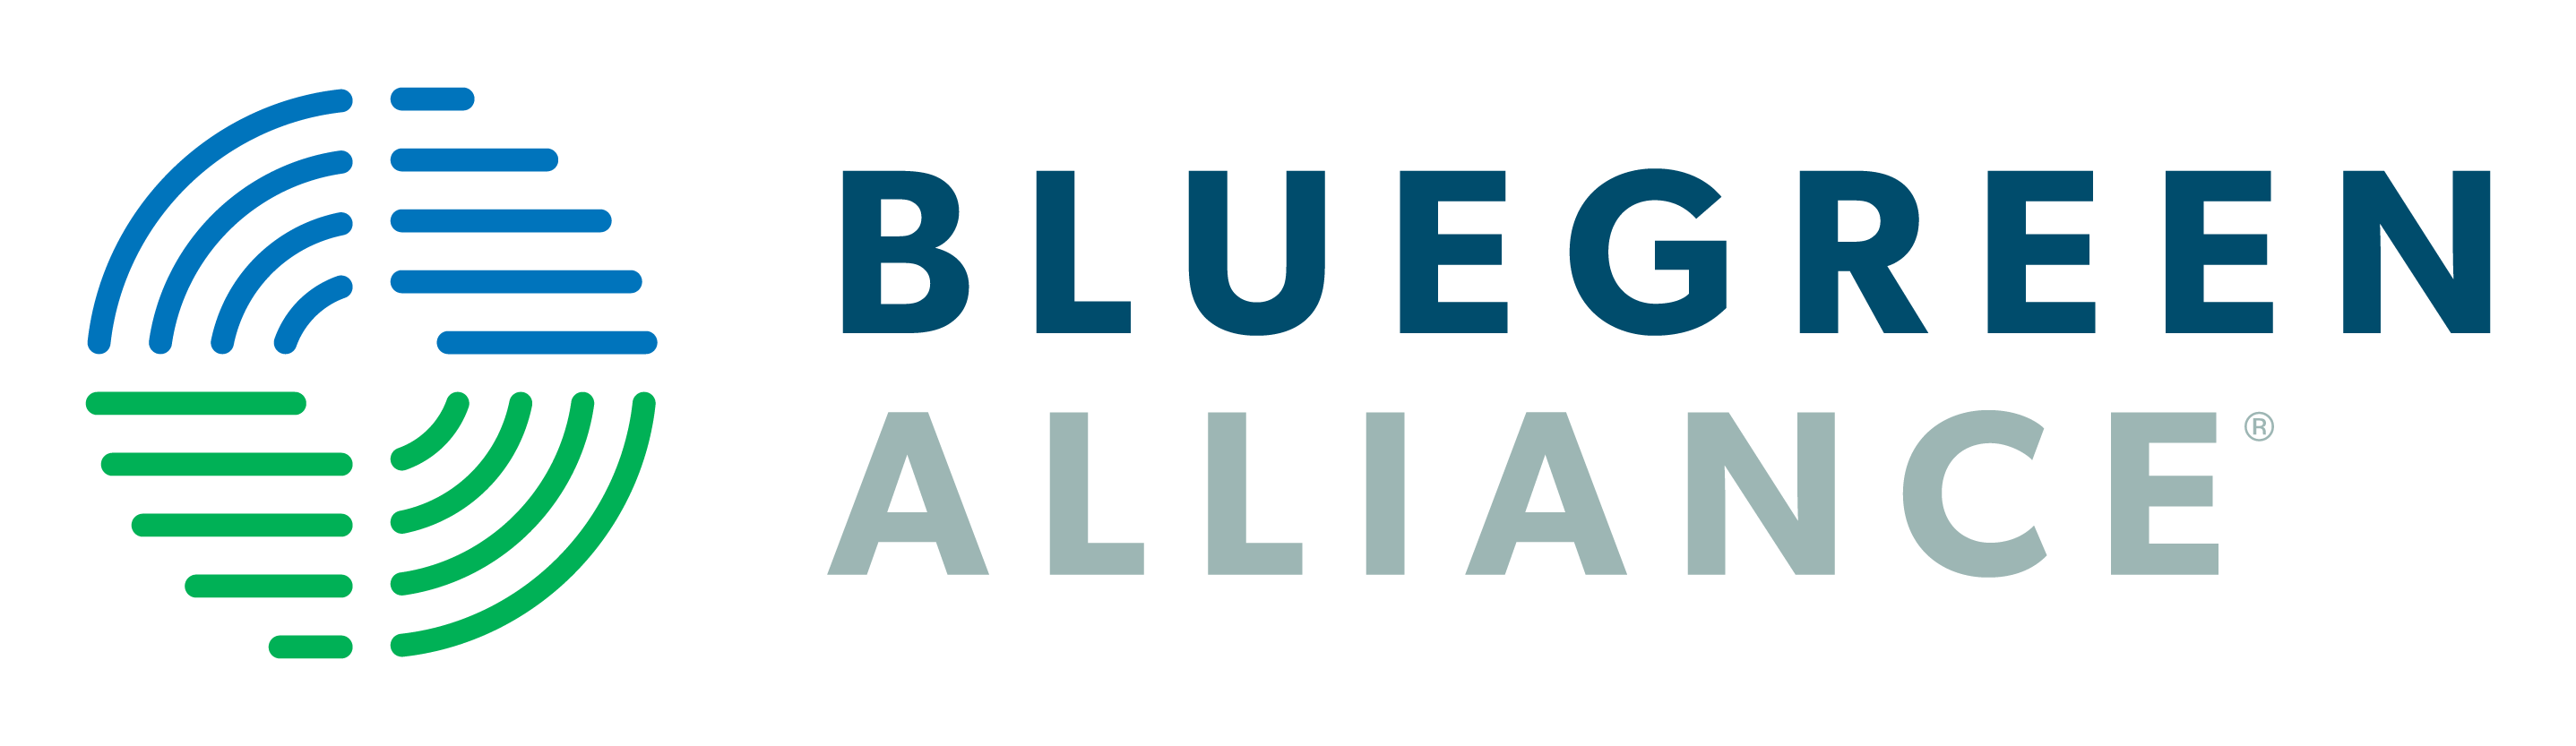 bluegreen alliance logo